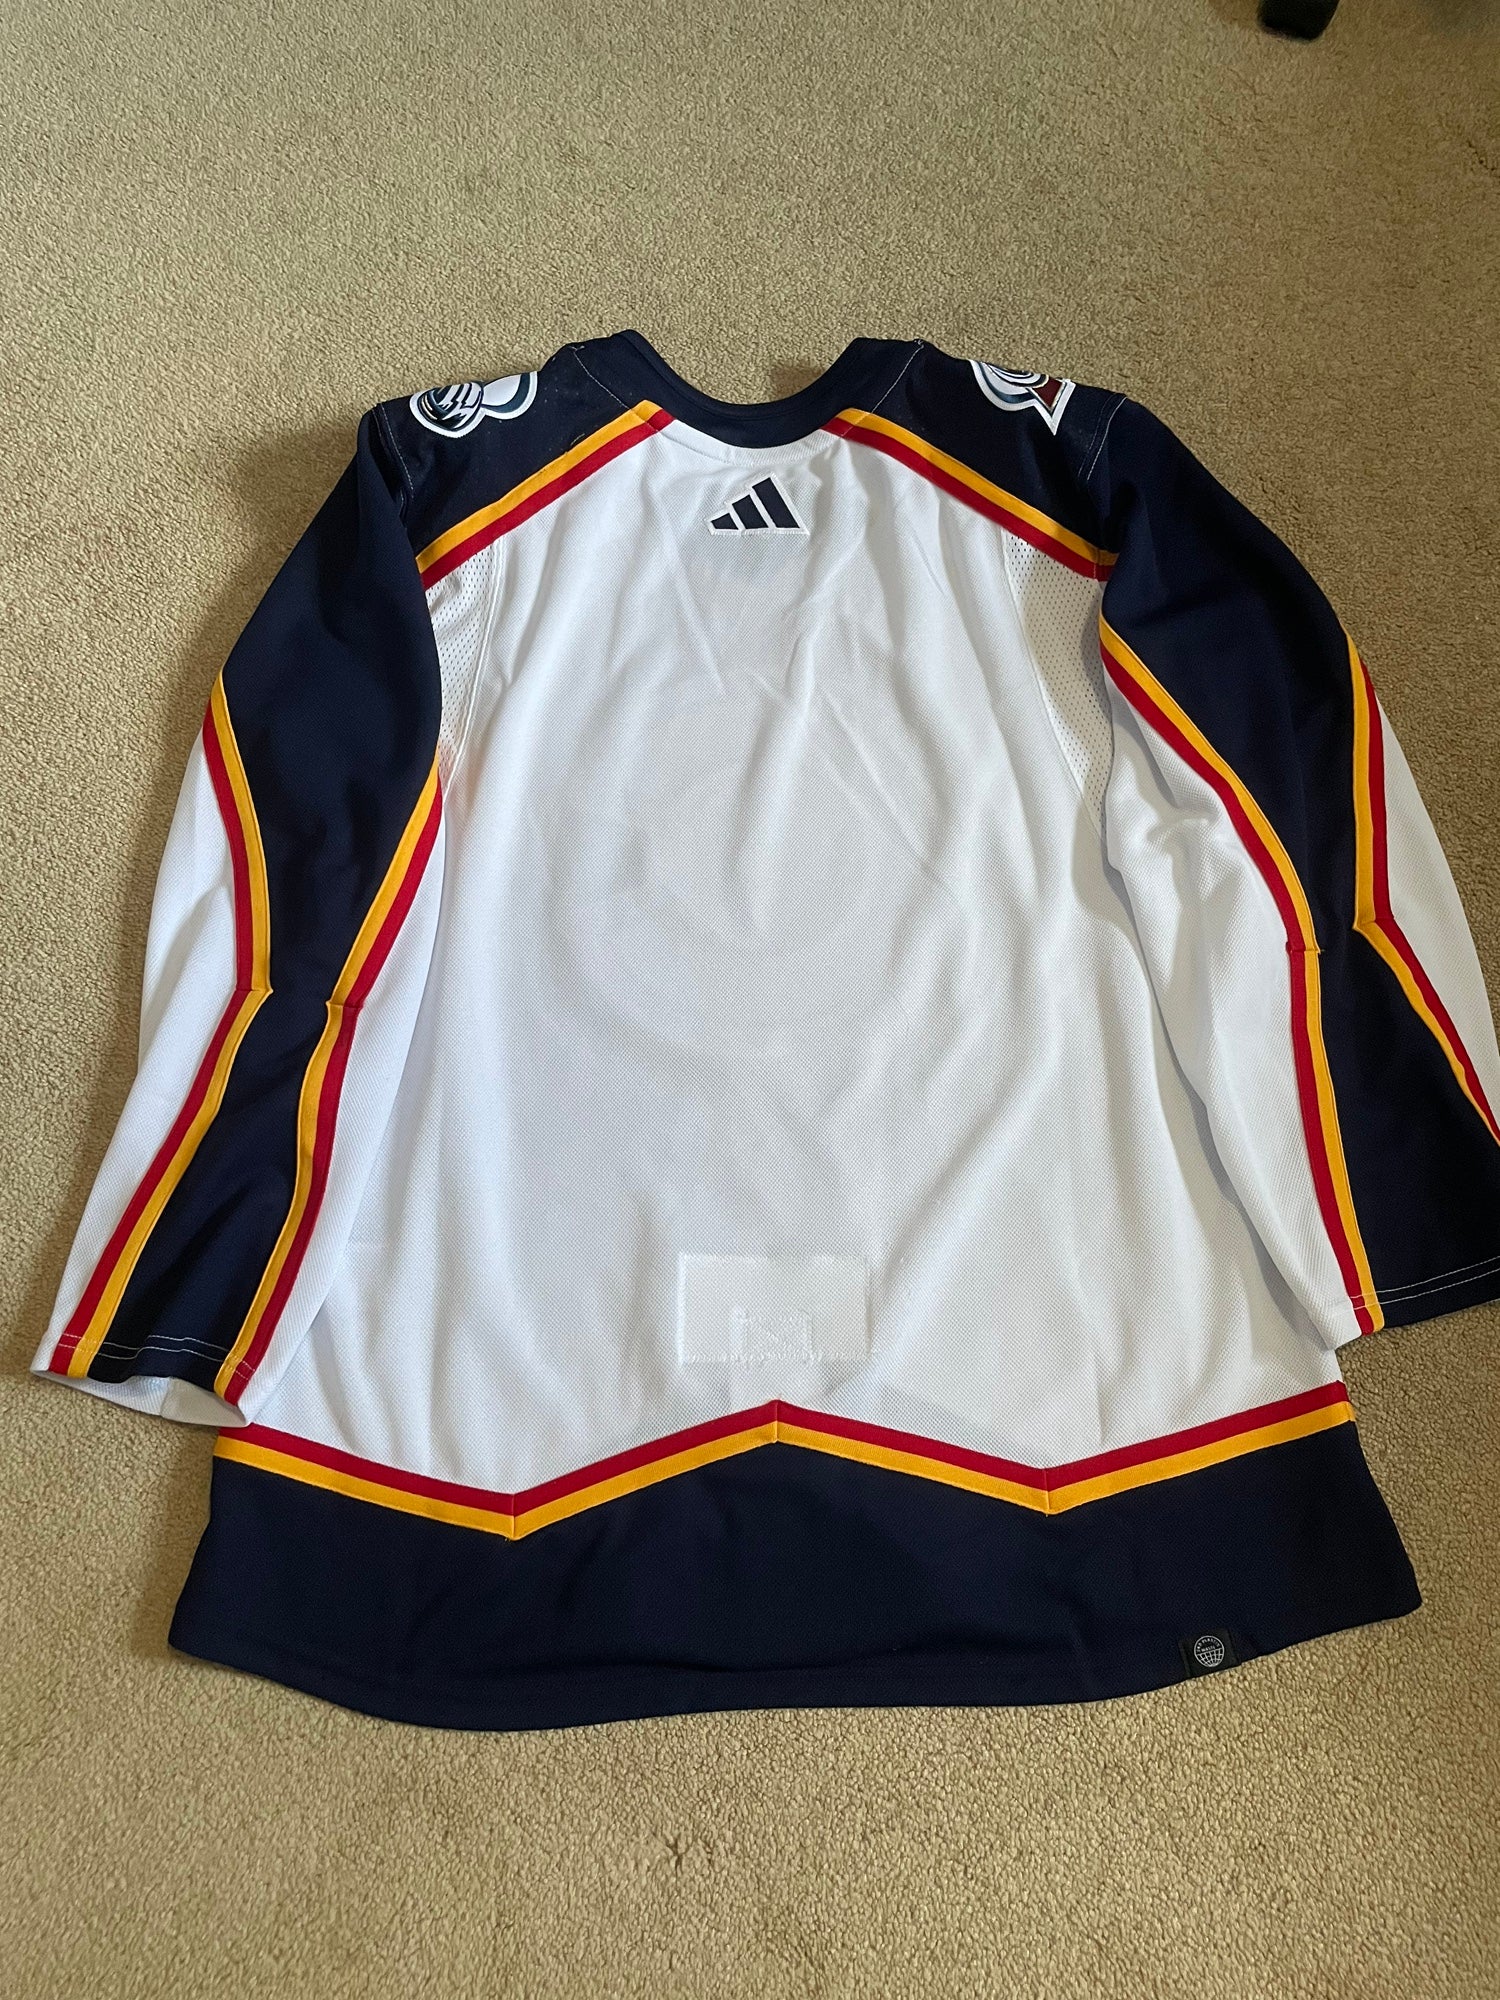 Colorado Avalanche Reverse Retro Team Jersey – Elite Sports Jersey